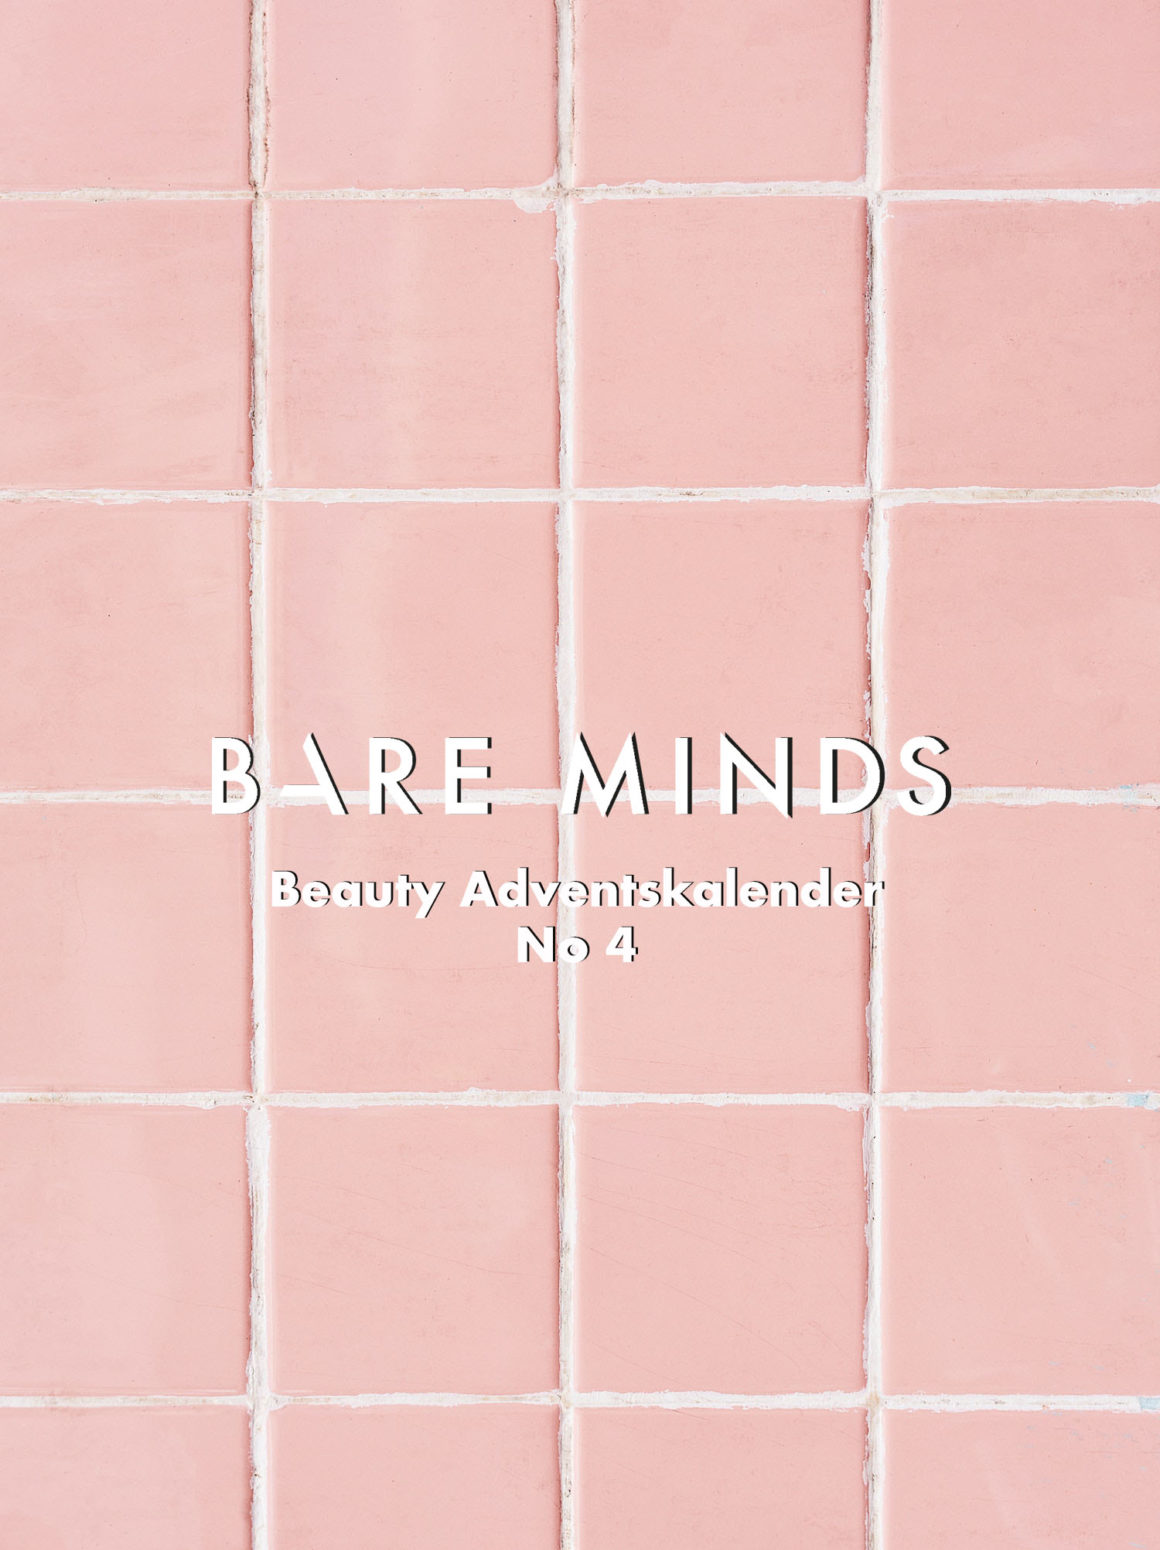 Bare Minds Beauty Adventskalender Nuxe Pflege rawpixel-539830-unsplash